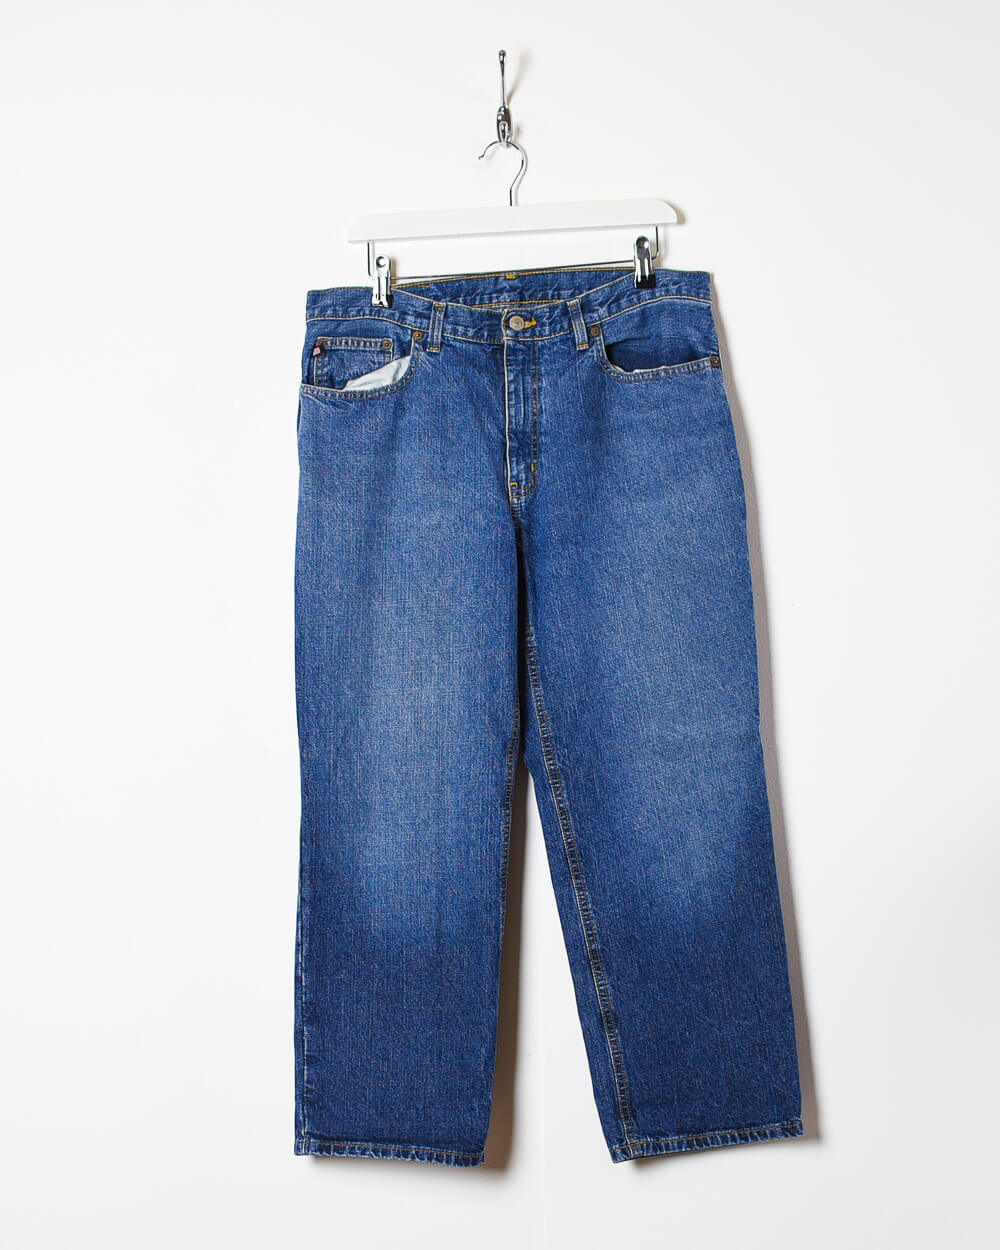 Vintage Ralph Lauren Jeans Black White Print Pants Women Size 4 / W30 L29 -   Canada